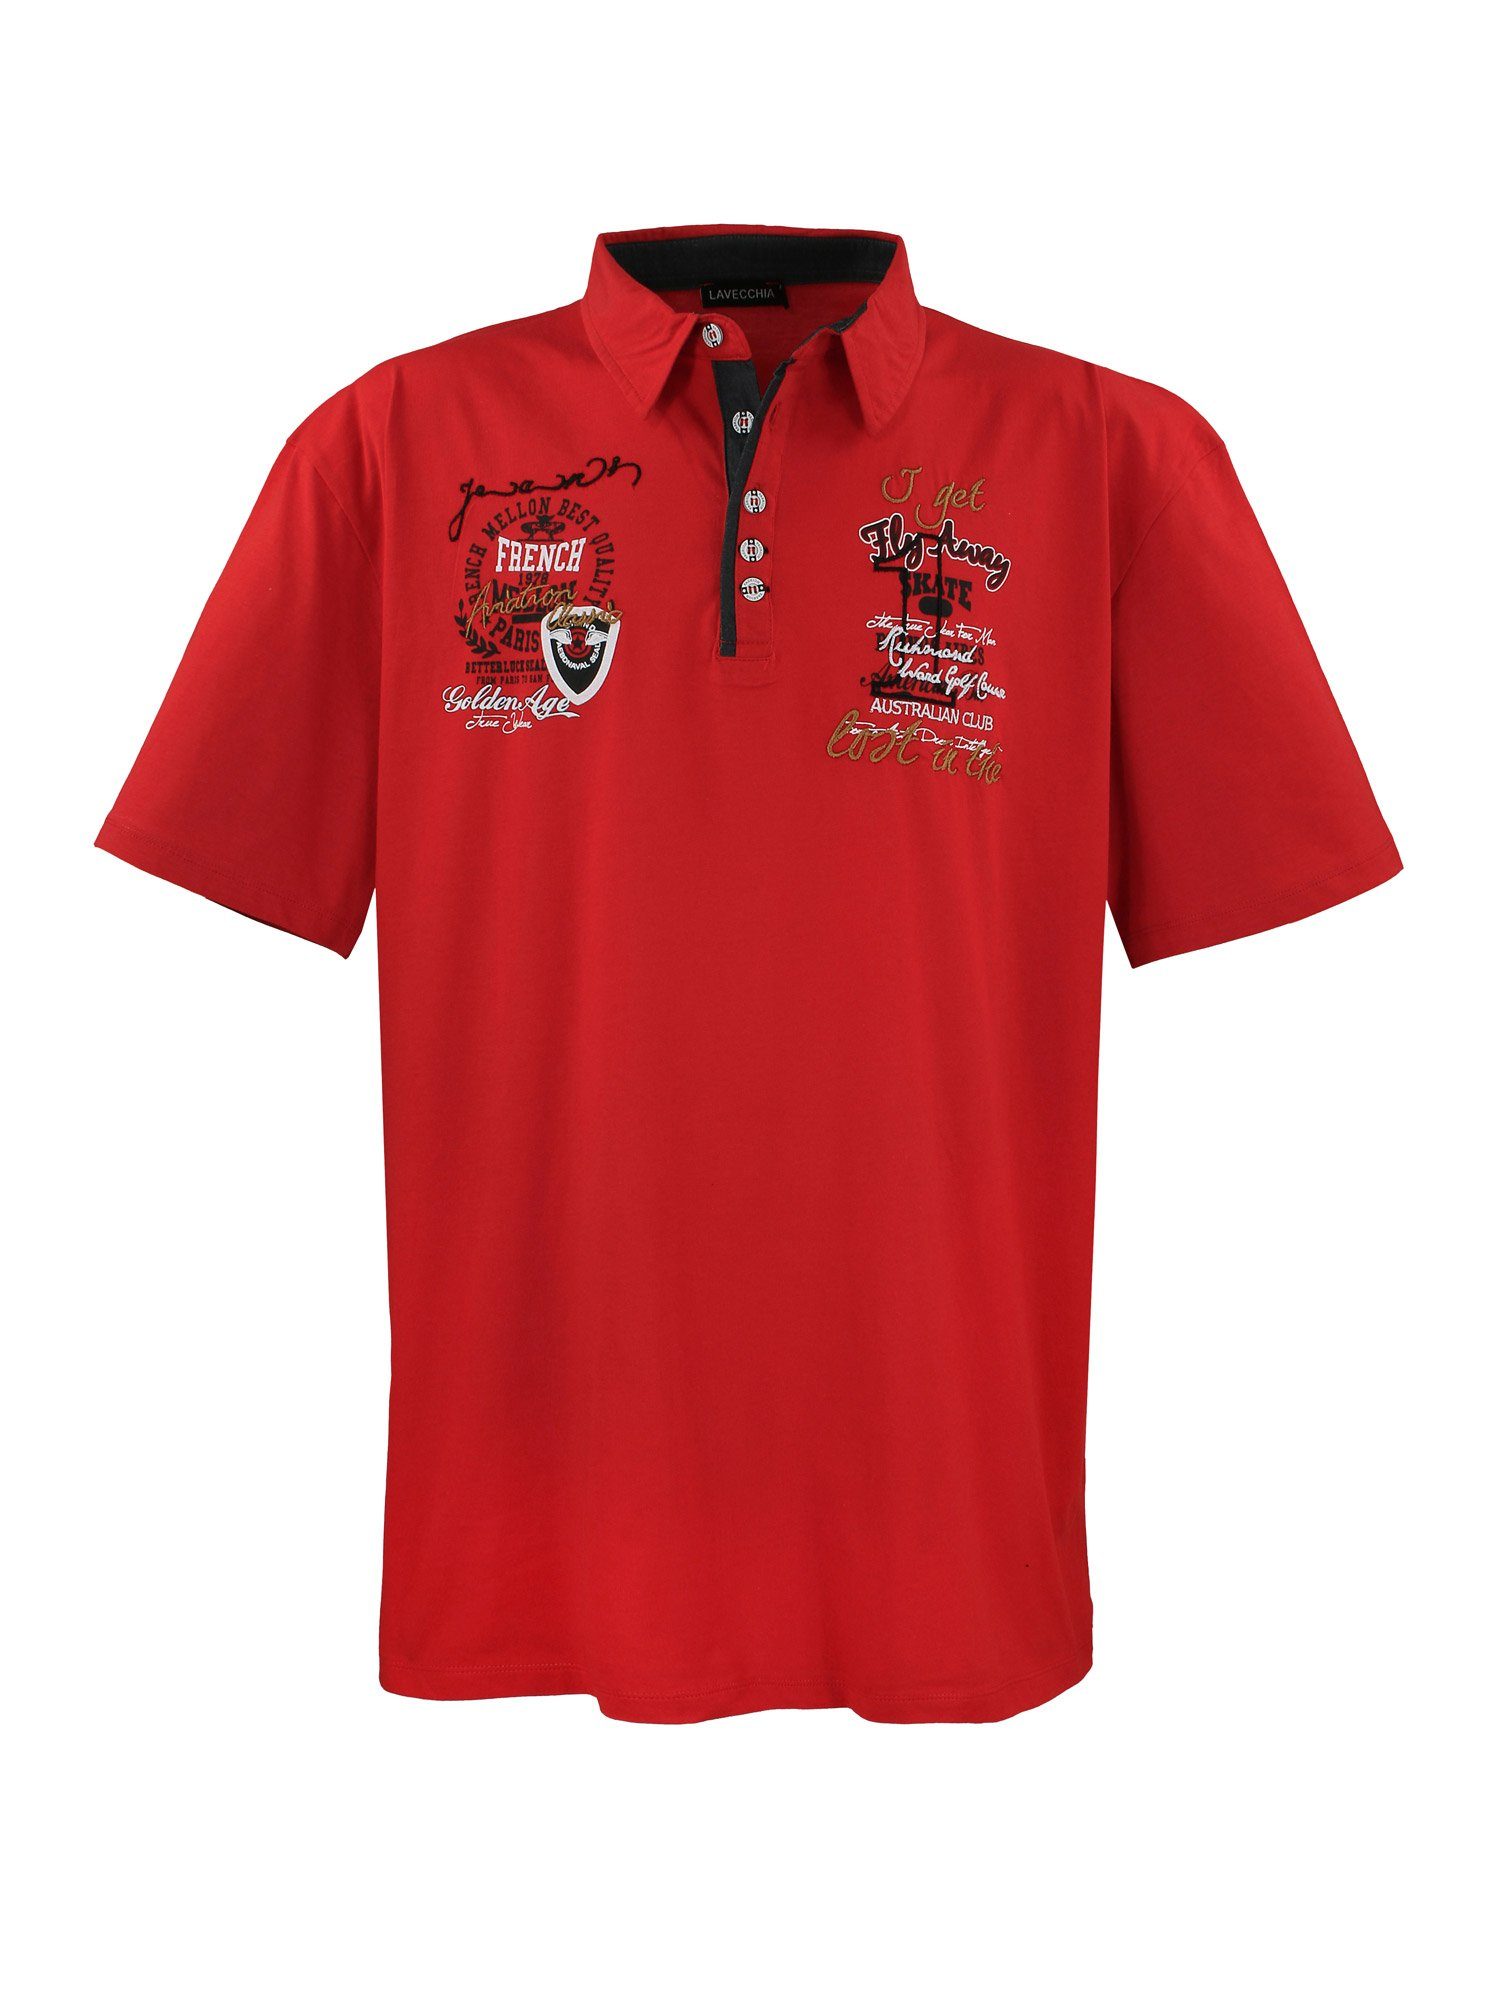 Lavecchia Poloshirt Übergrößen Herren Polo rot LV-3101 Polo Shirt Herren Shirt